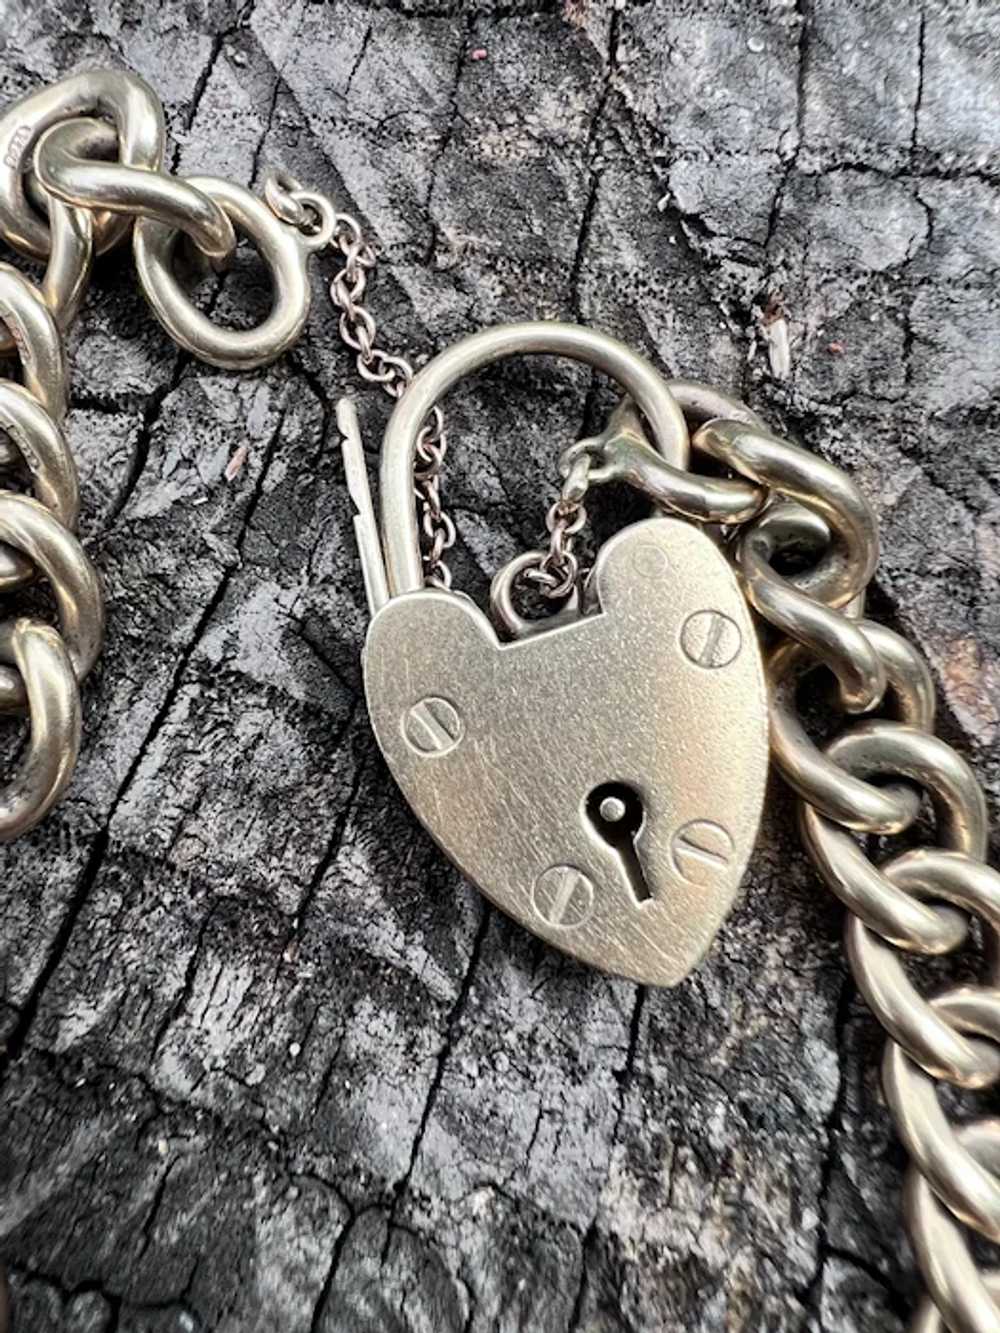 Vintage English 9k Rose Gold Curb Chain Heart Padlock Bracelet 7.7